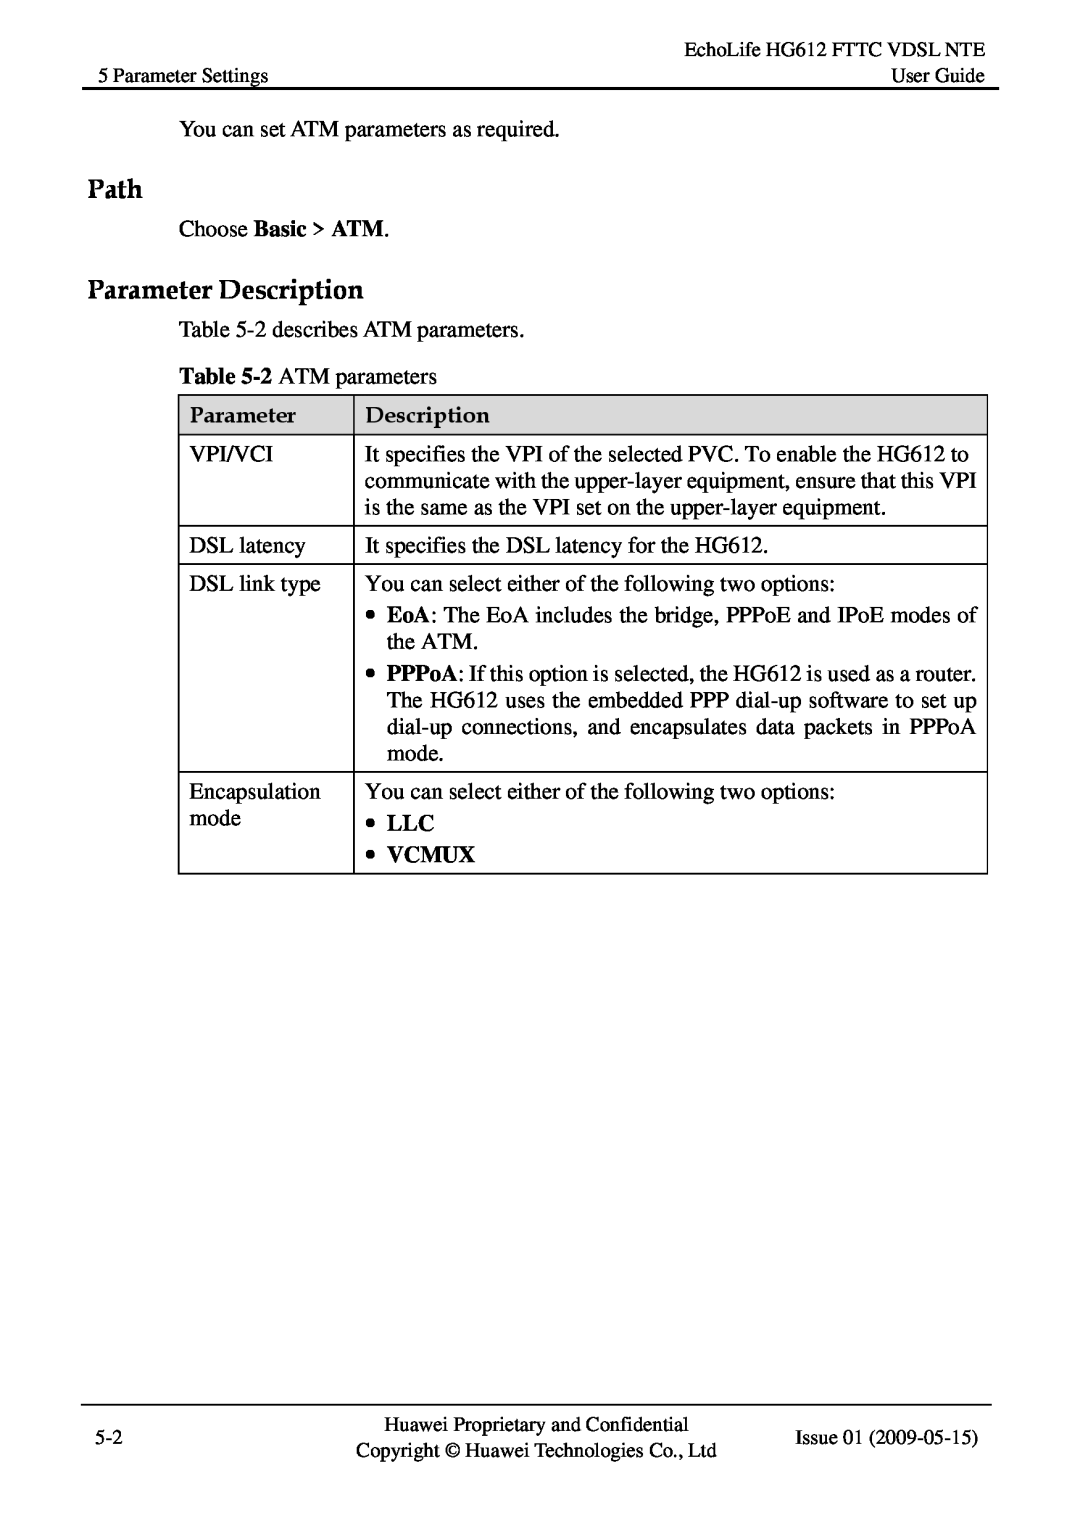 Huawei HG612FTTC VDSL NTE manual Path, Parameter Description, z LLC, z VCMUX 